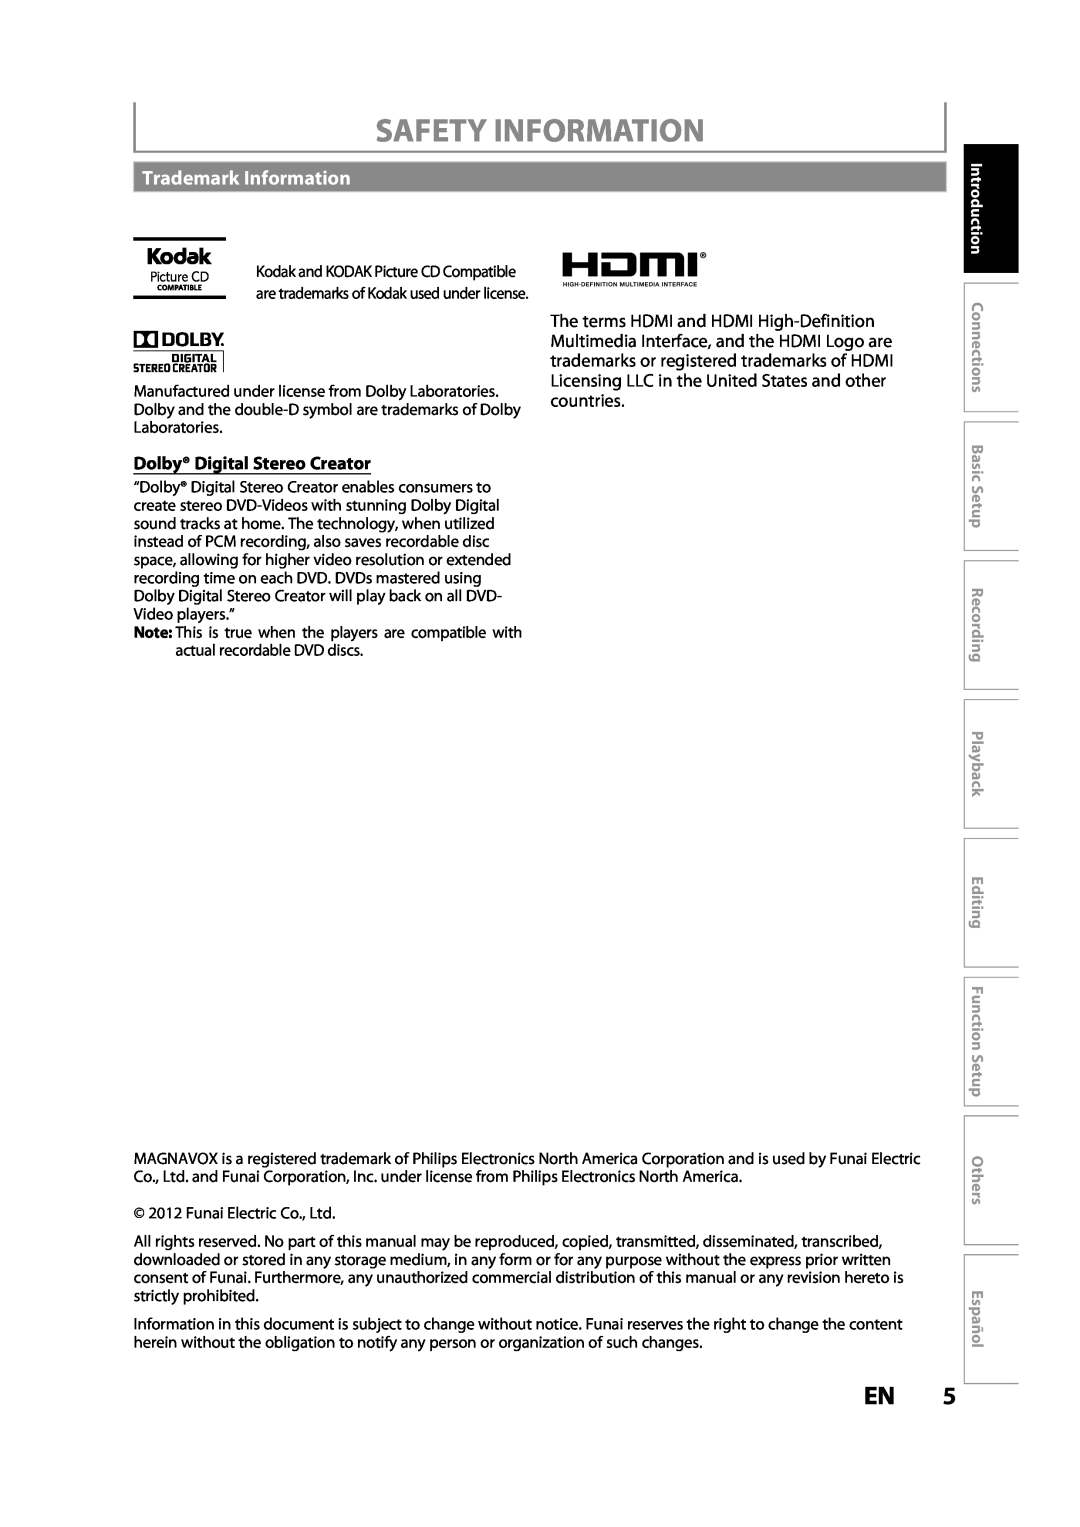 Magnavox MDR533H owner manual Trademark Information, Dolby Digital Stereo Creator, Safety Information, Español 